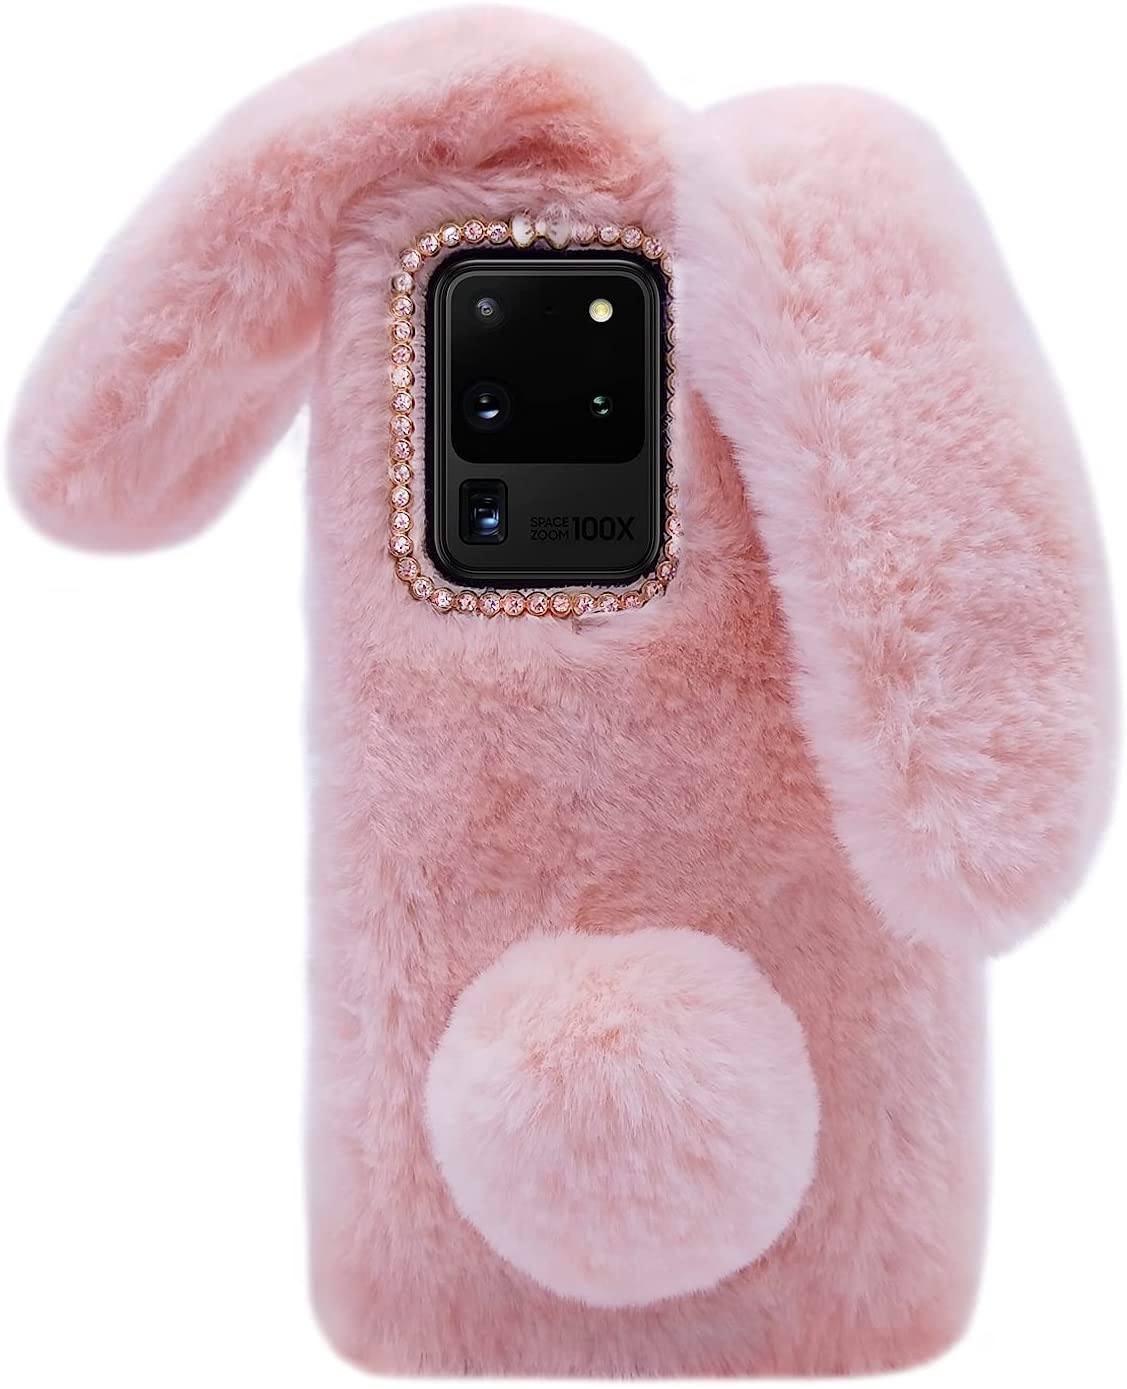 Meeting Go up and down Emigrate Husa telefon pufoasa cu urechiuse de iepuras pentru Samsung S21 roz ⋆  eSell.ro